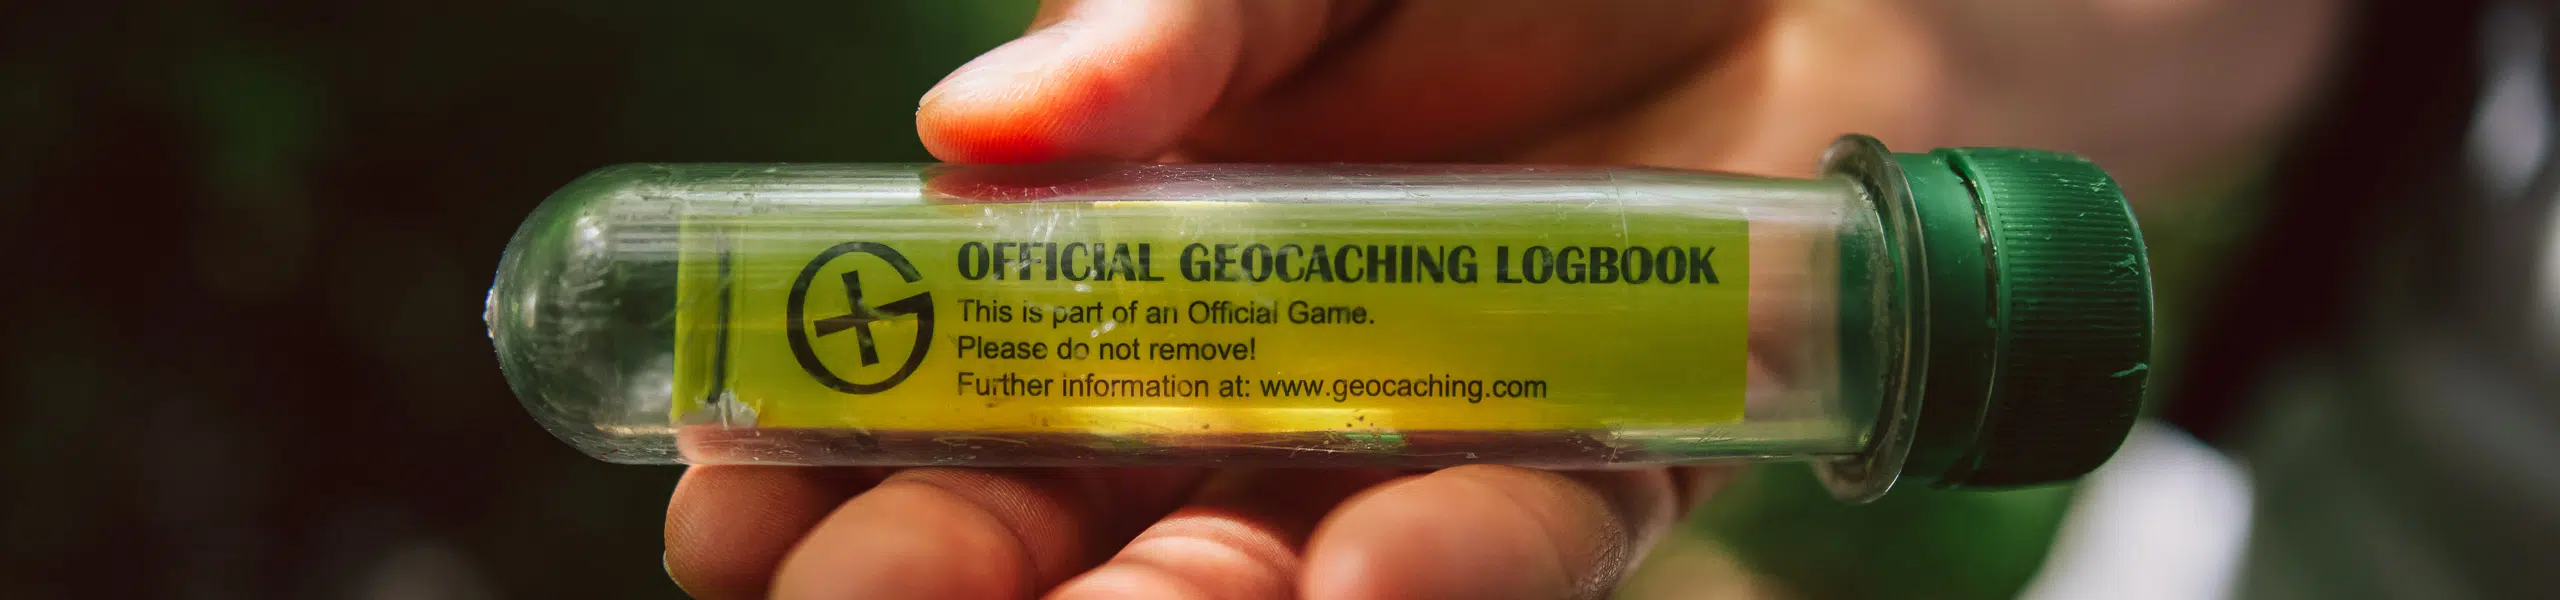 Symbolbild Geocaching